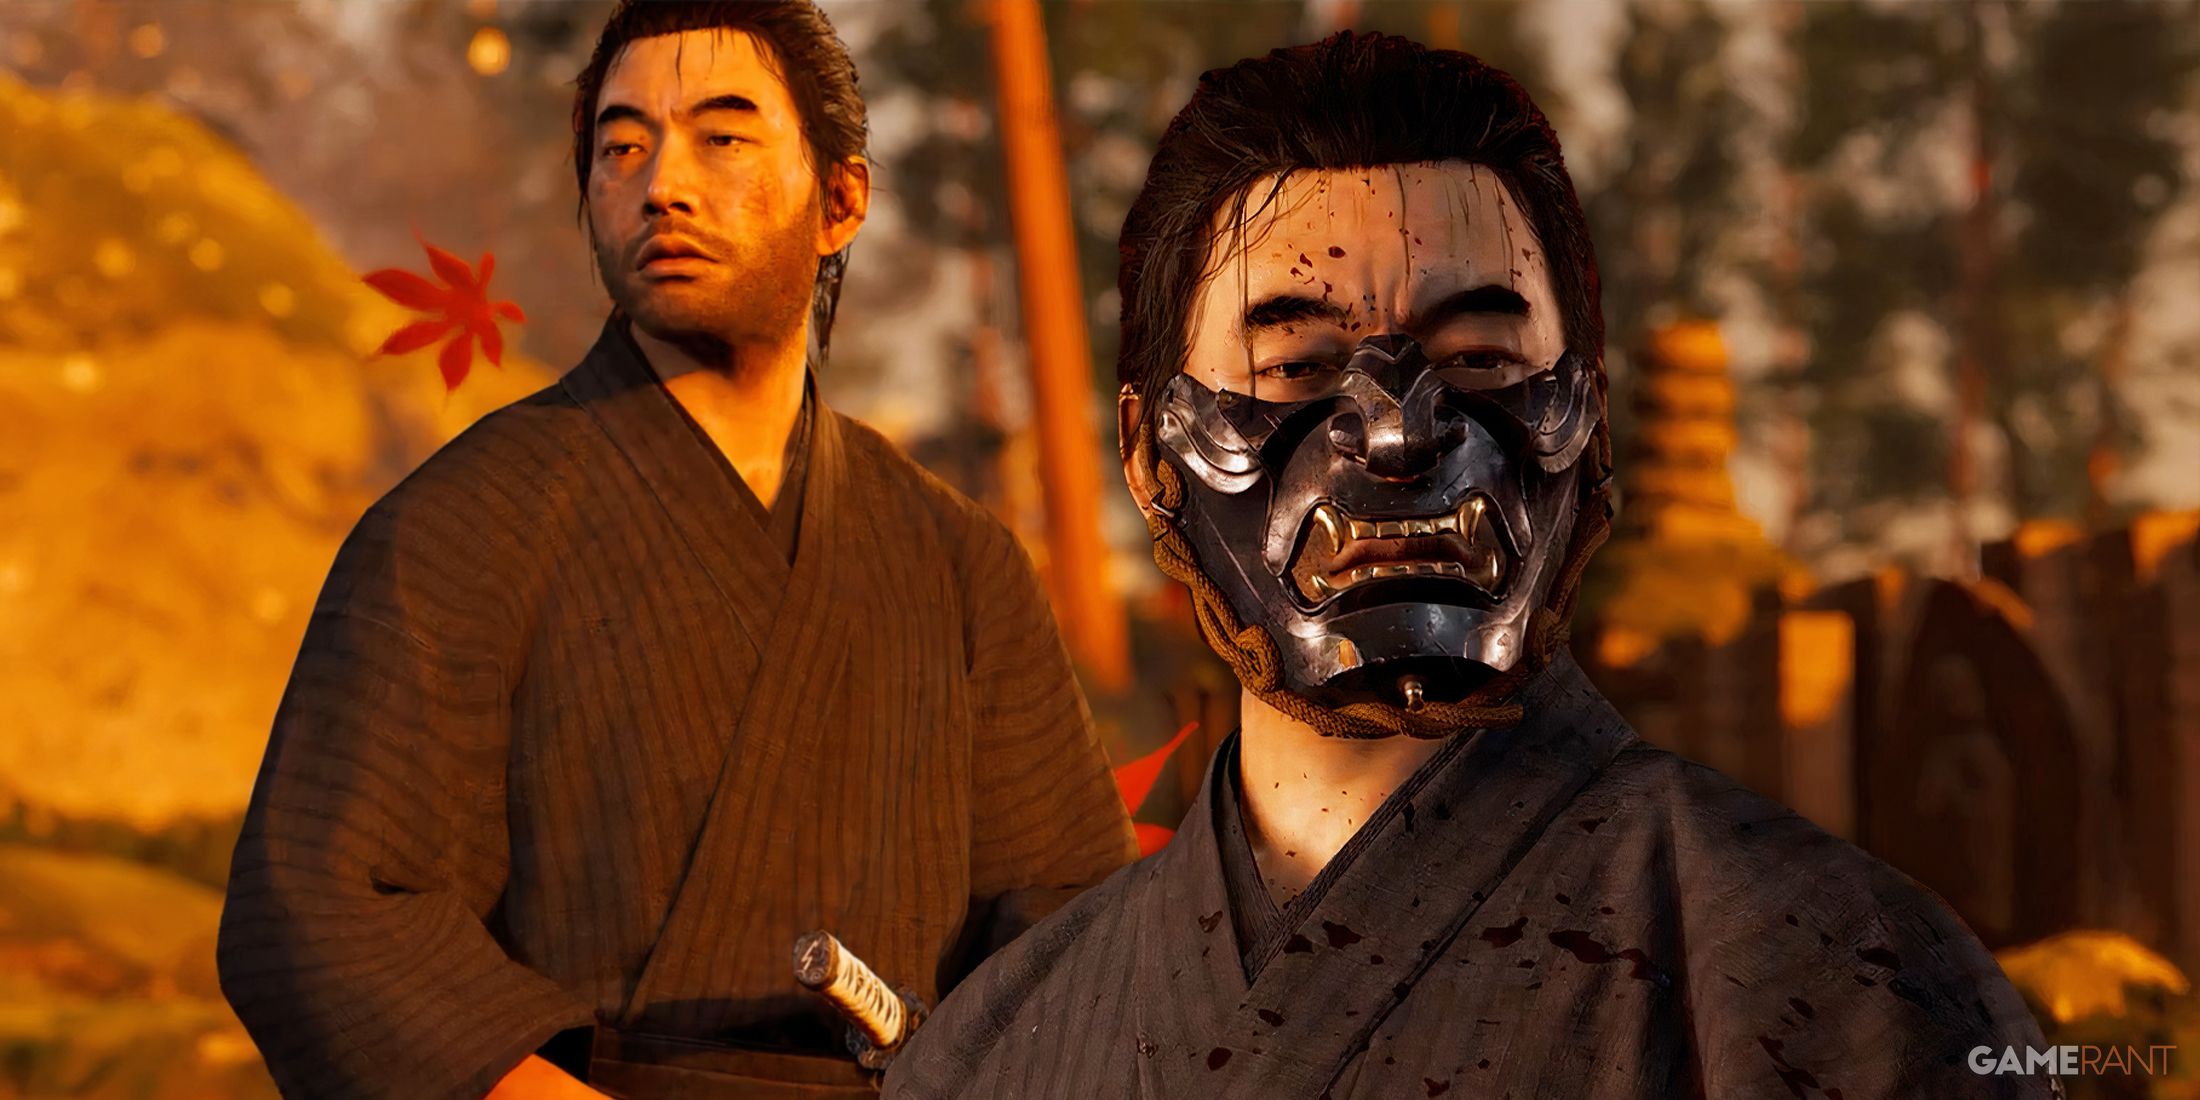 Jin Sakai wearing the Ghost mask from Ghost of Tsushima